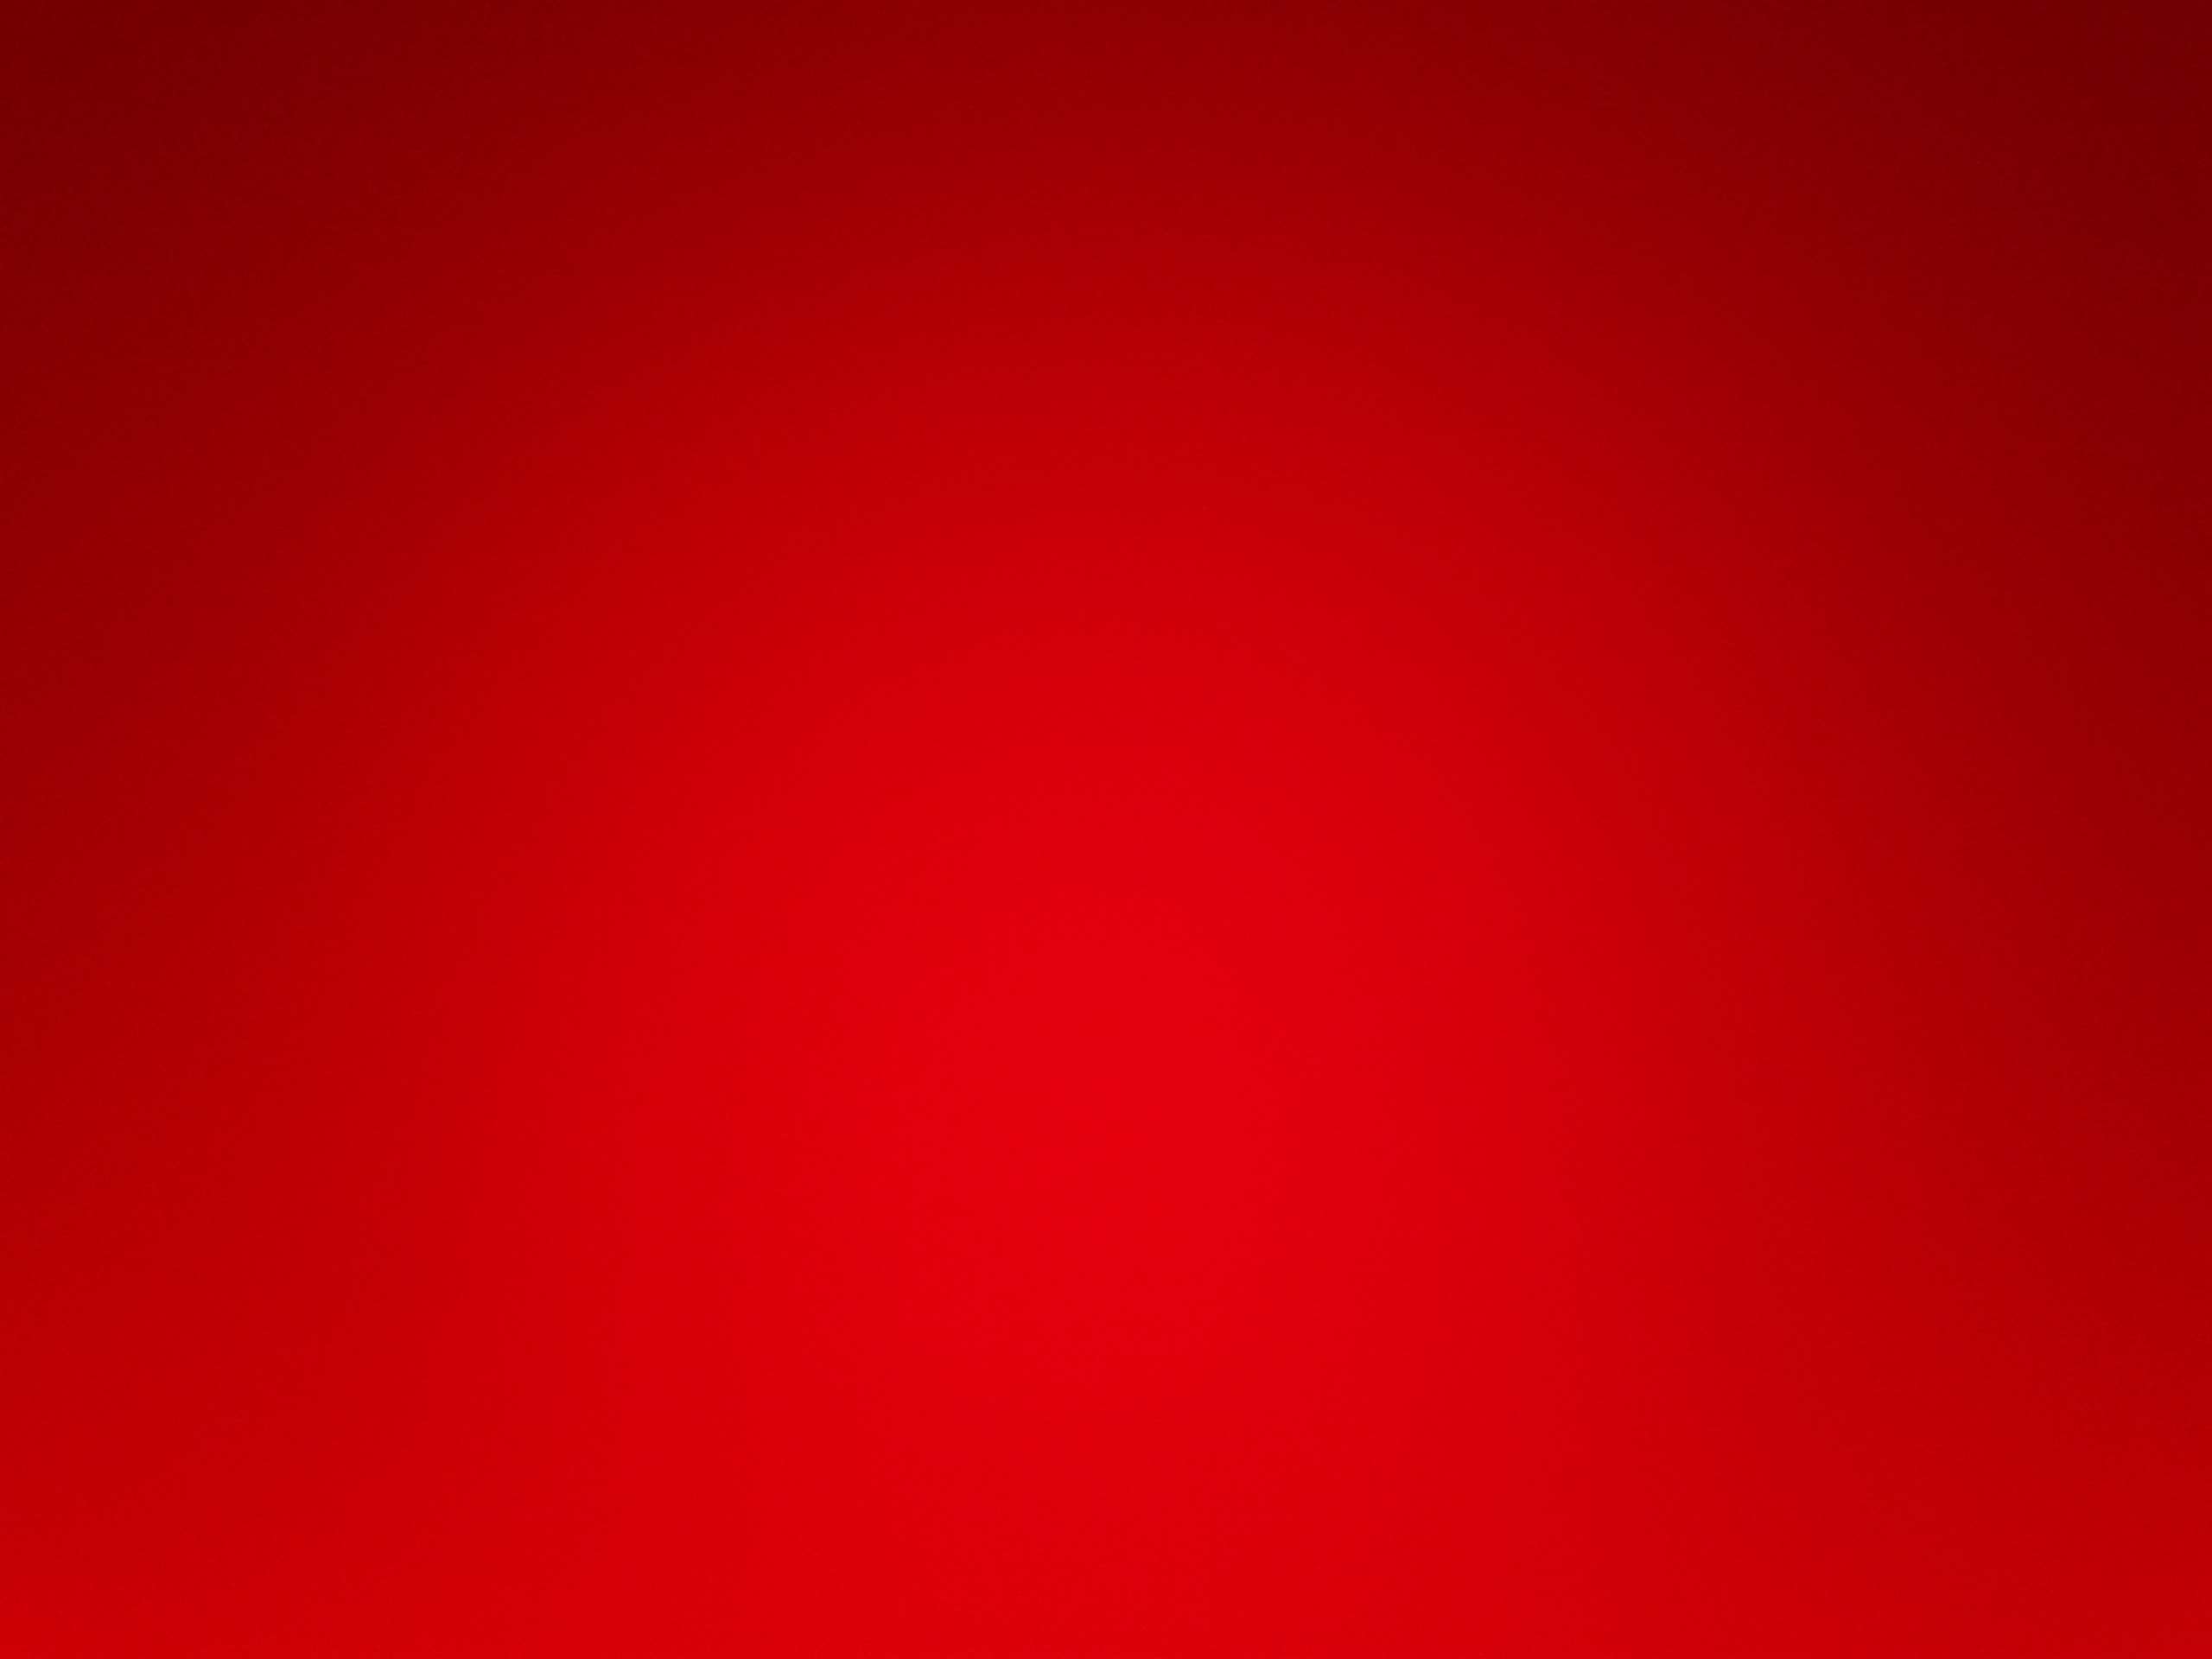 Red wallpaper | 2560x1920 | #44519